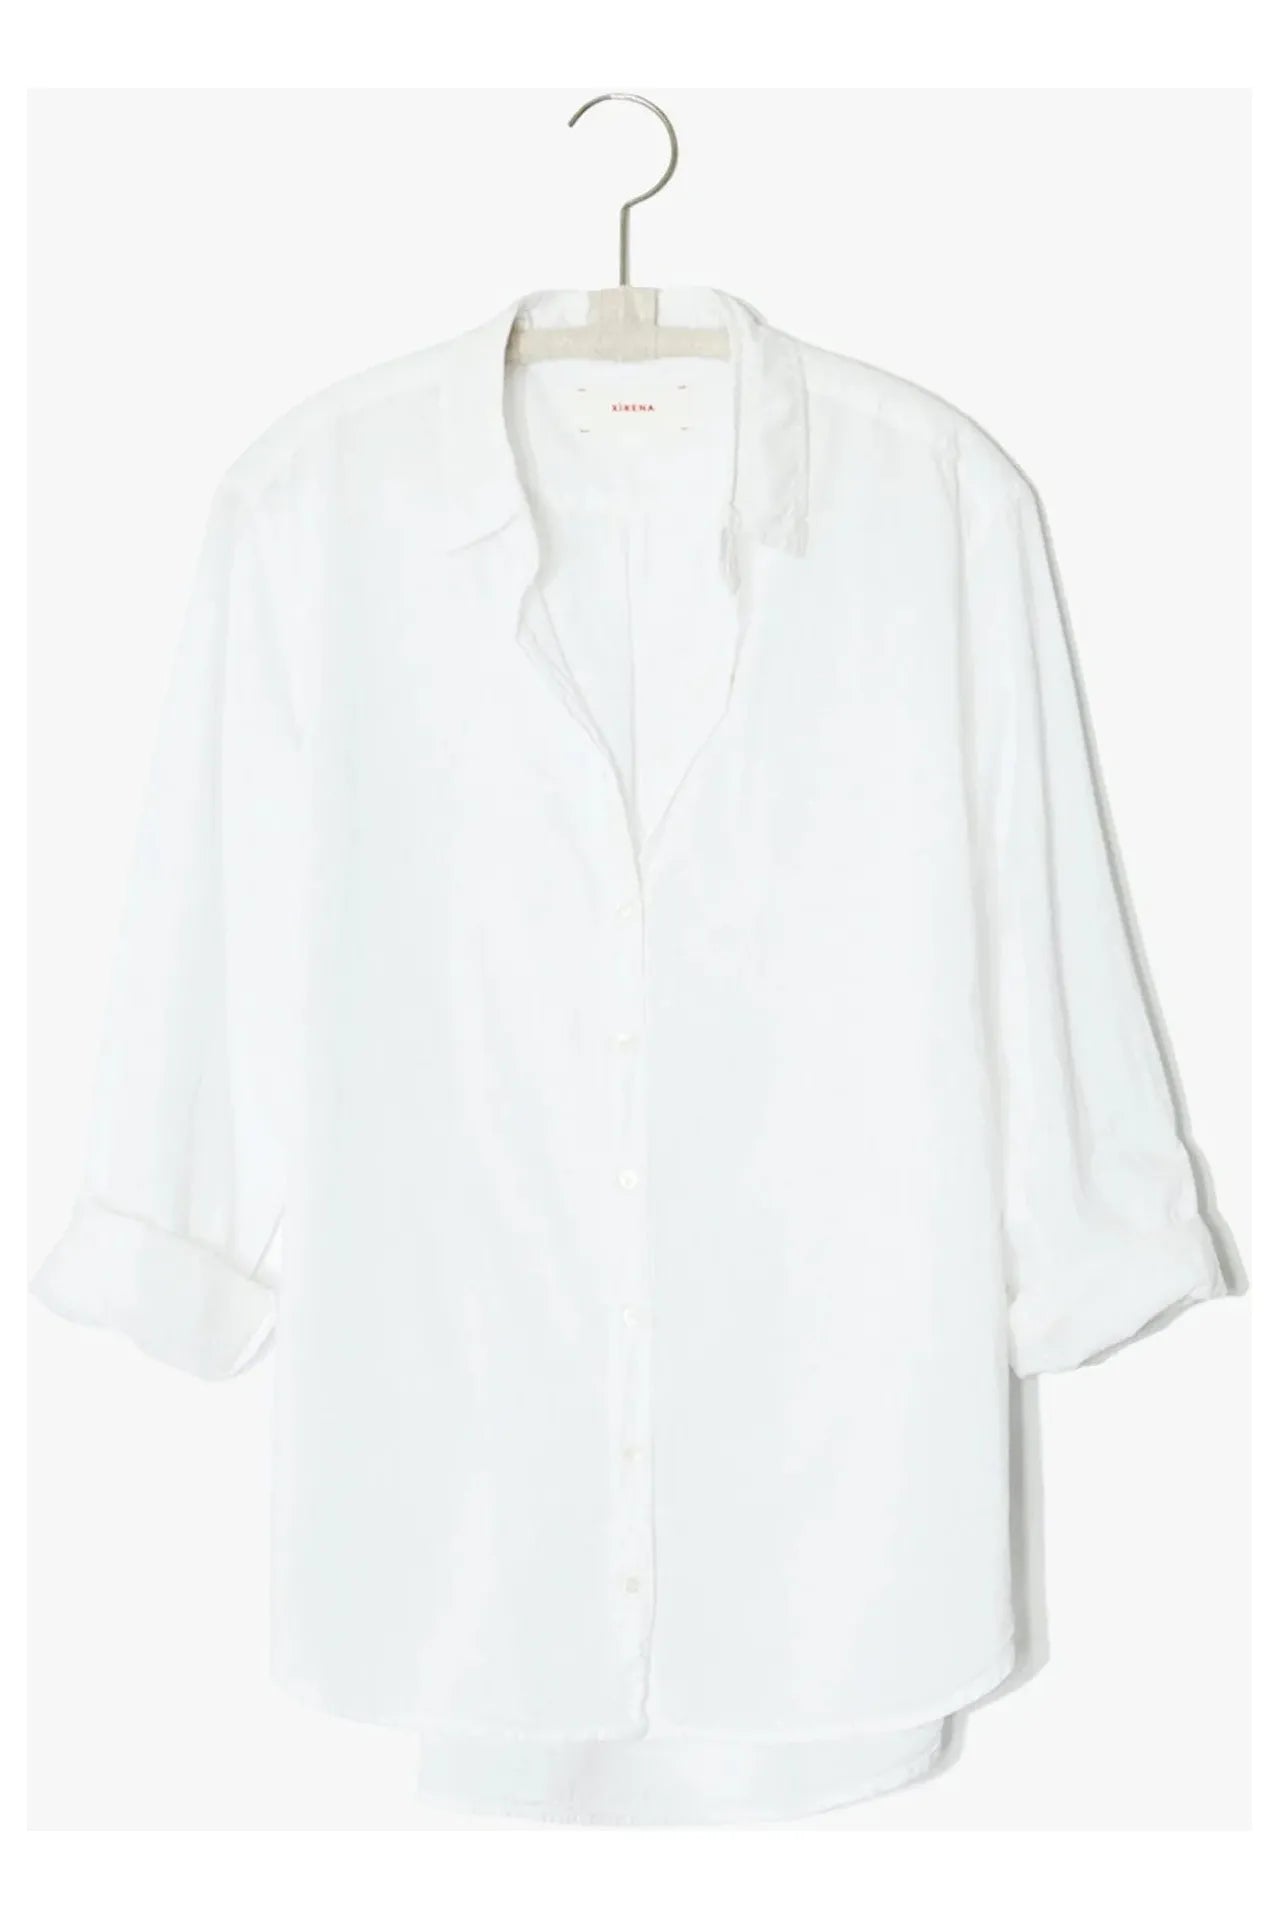 Beau Shirt in White by Xirena